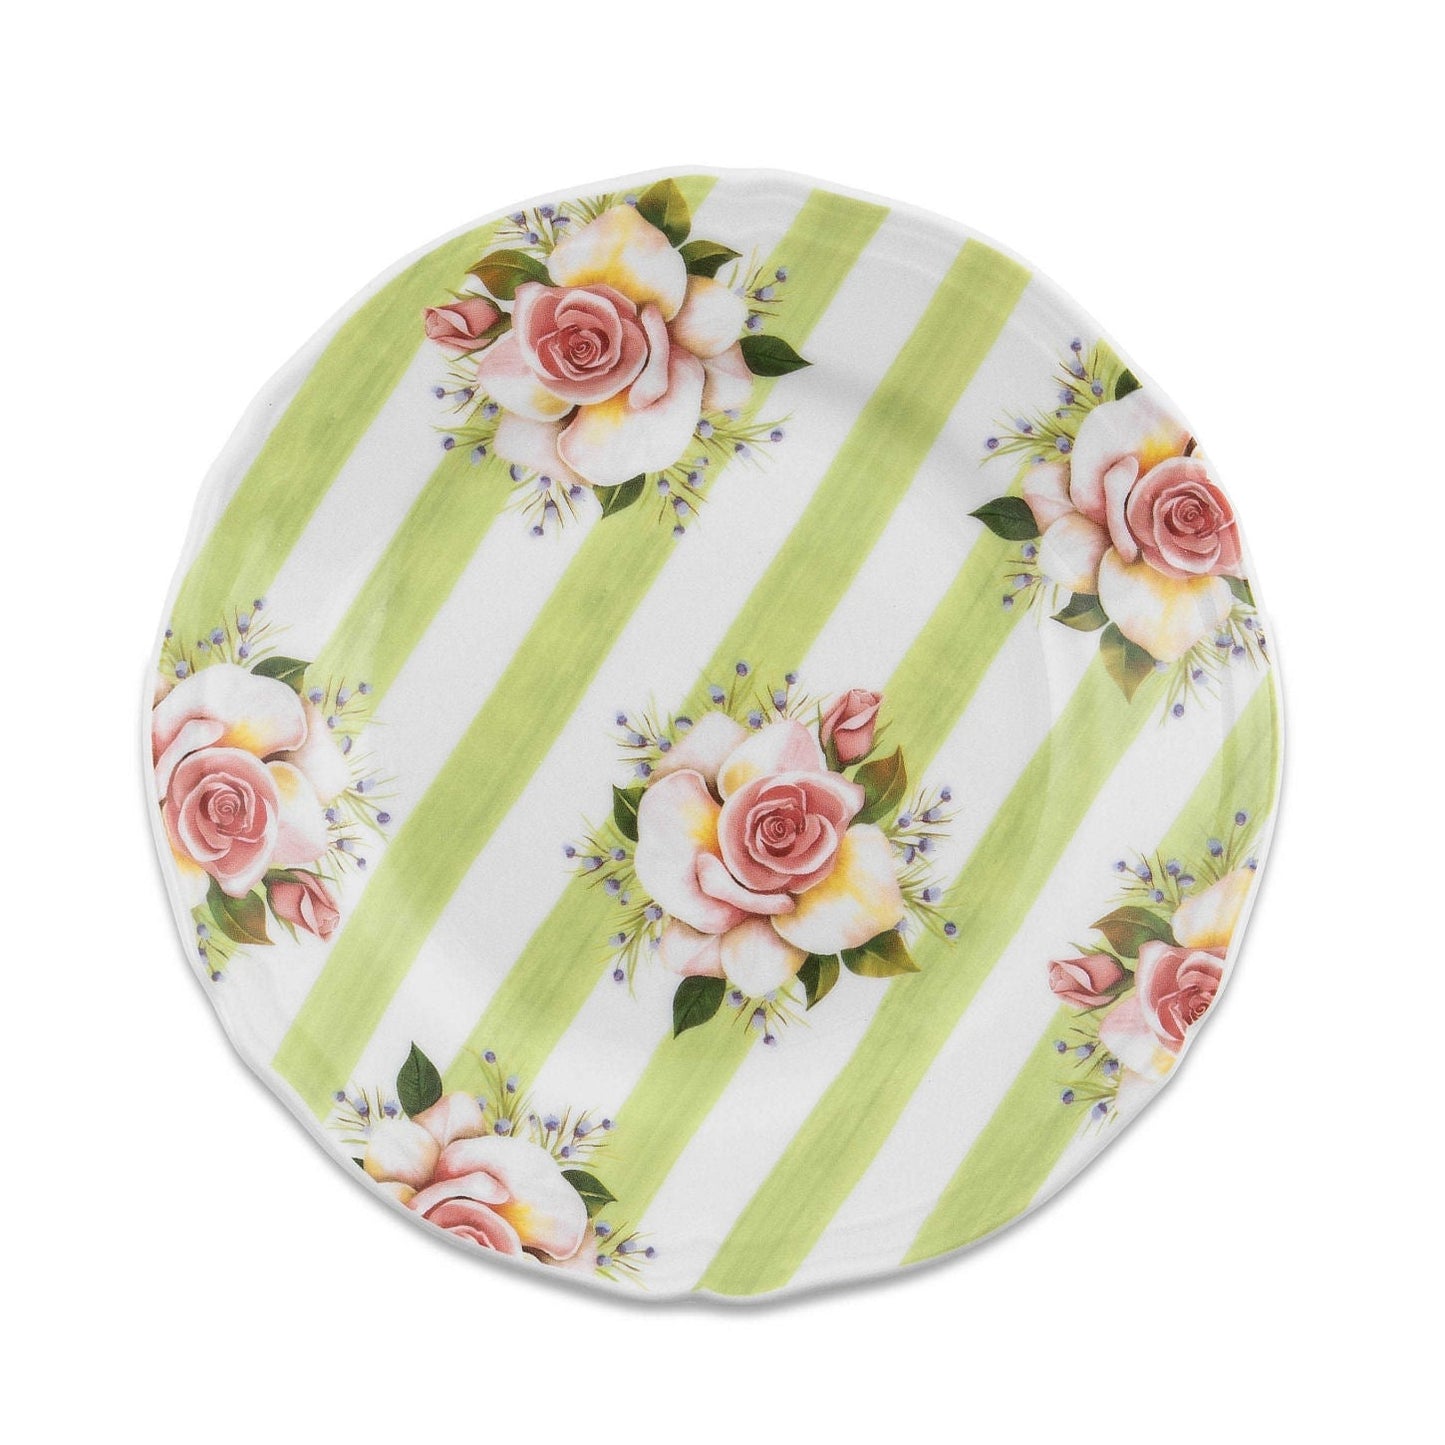 Wildflowers Dessert Plate Green by Mackenzie-Childs - |VESIMI Design| Luxury and Rustic bathrooms online